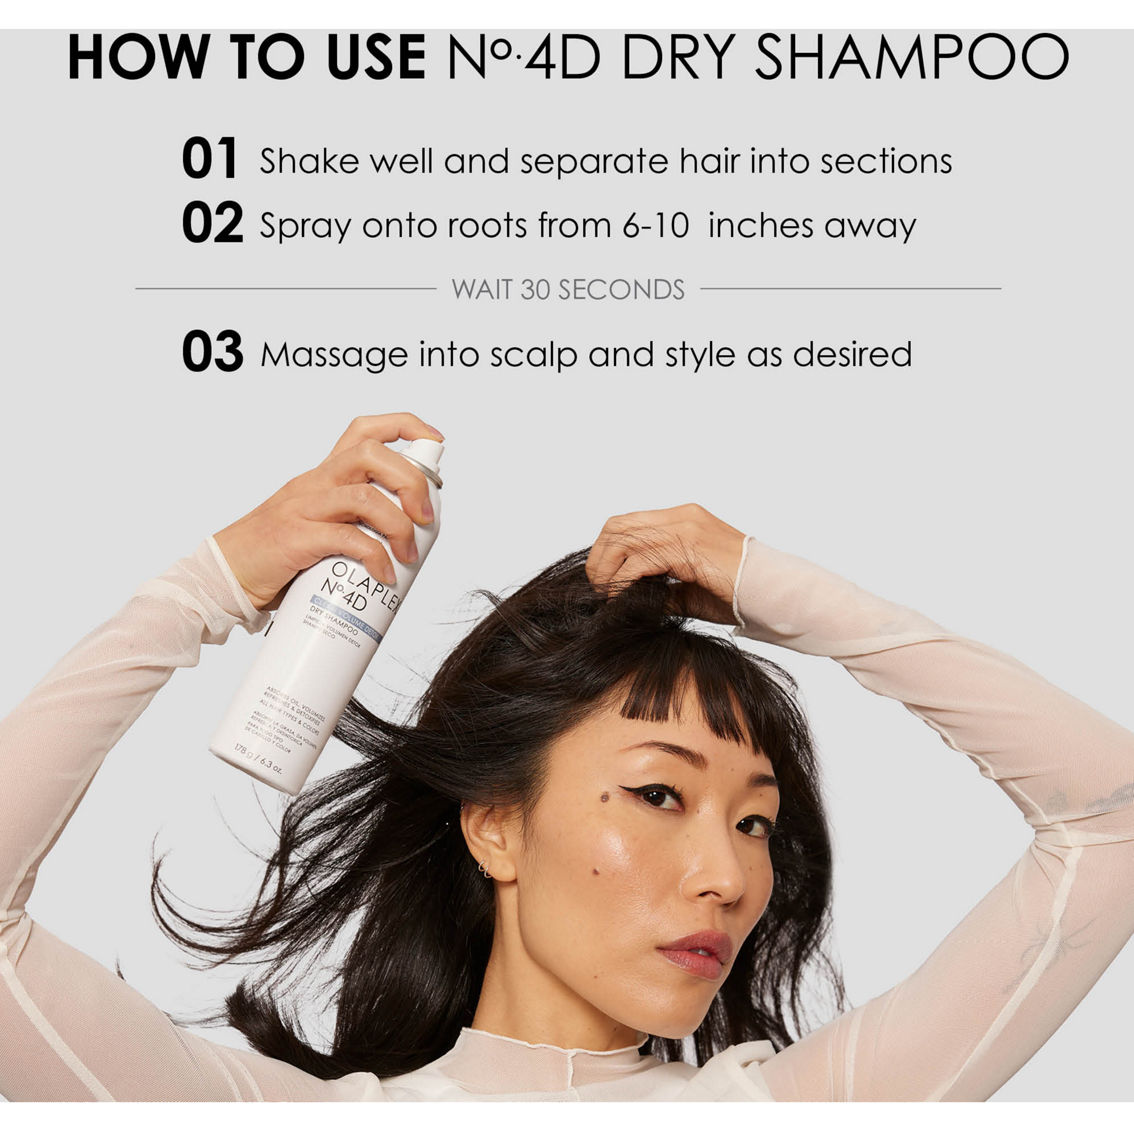 Olaplex No. 4D Clean Volume Detox Dry Shampoo 6.3 oz. - Image 6 of 9